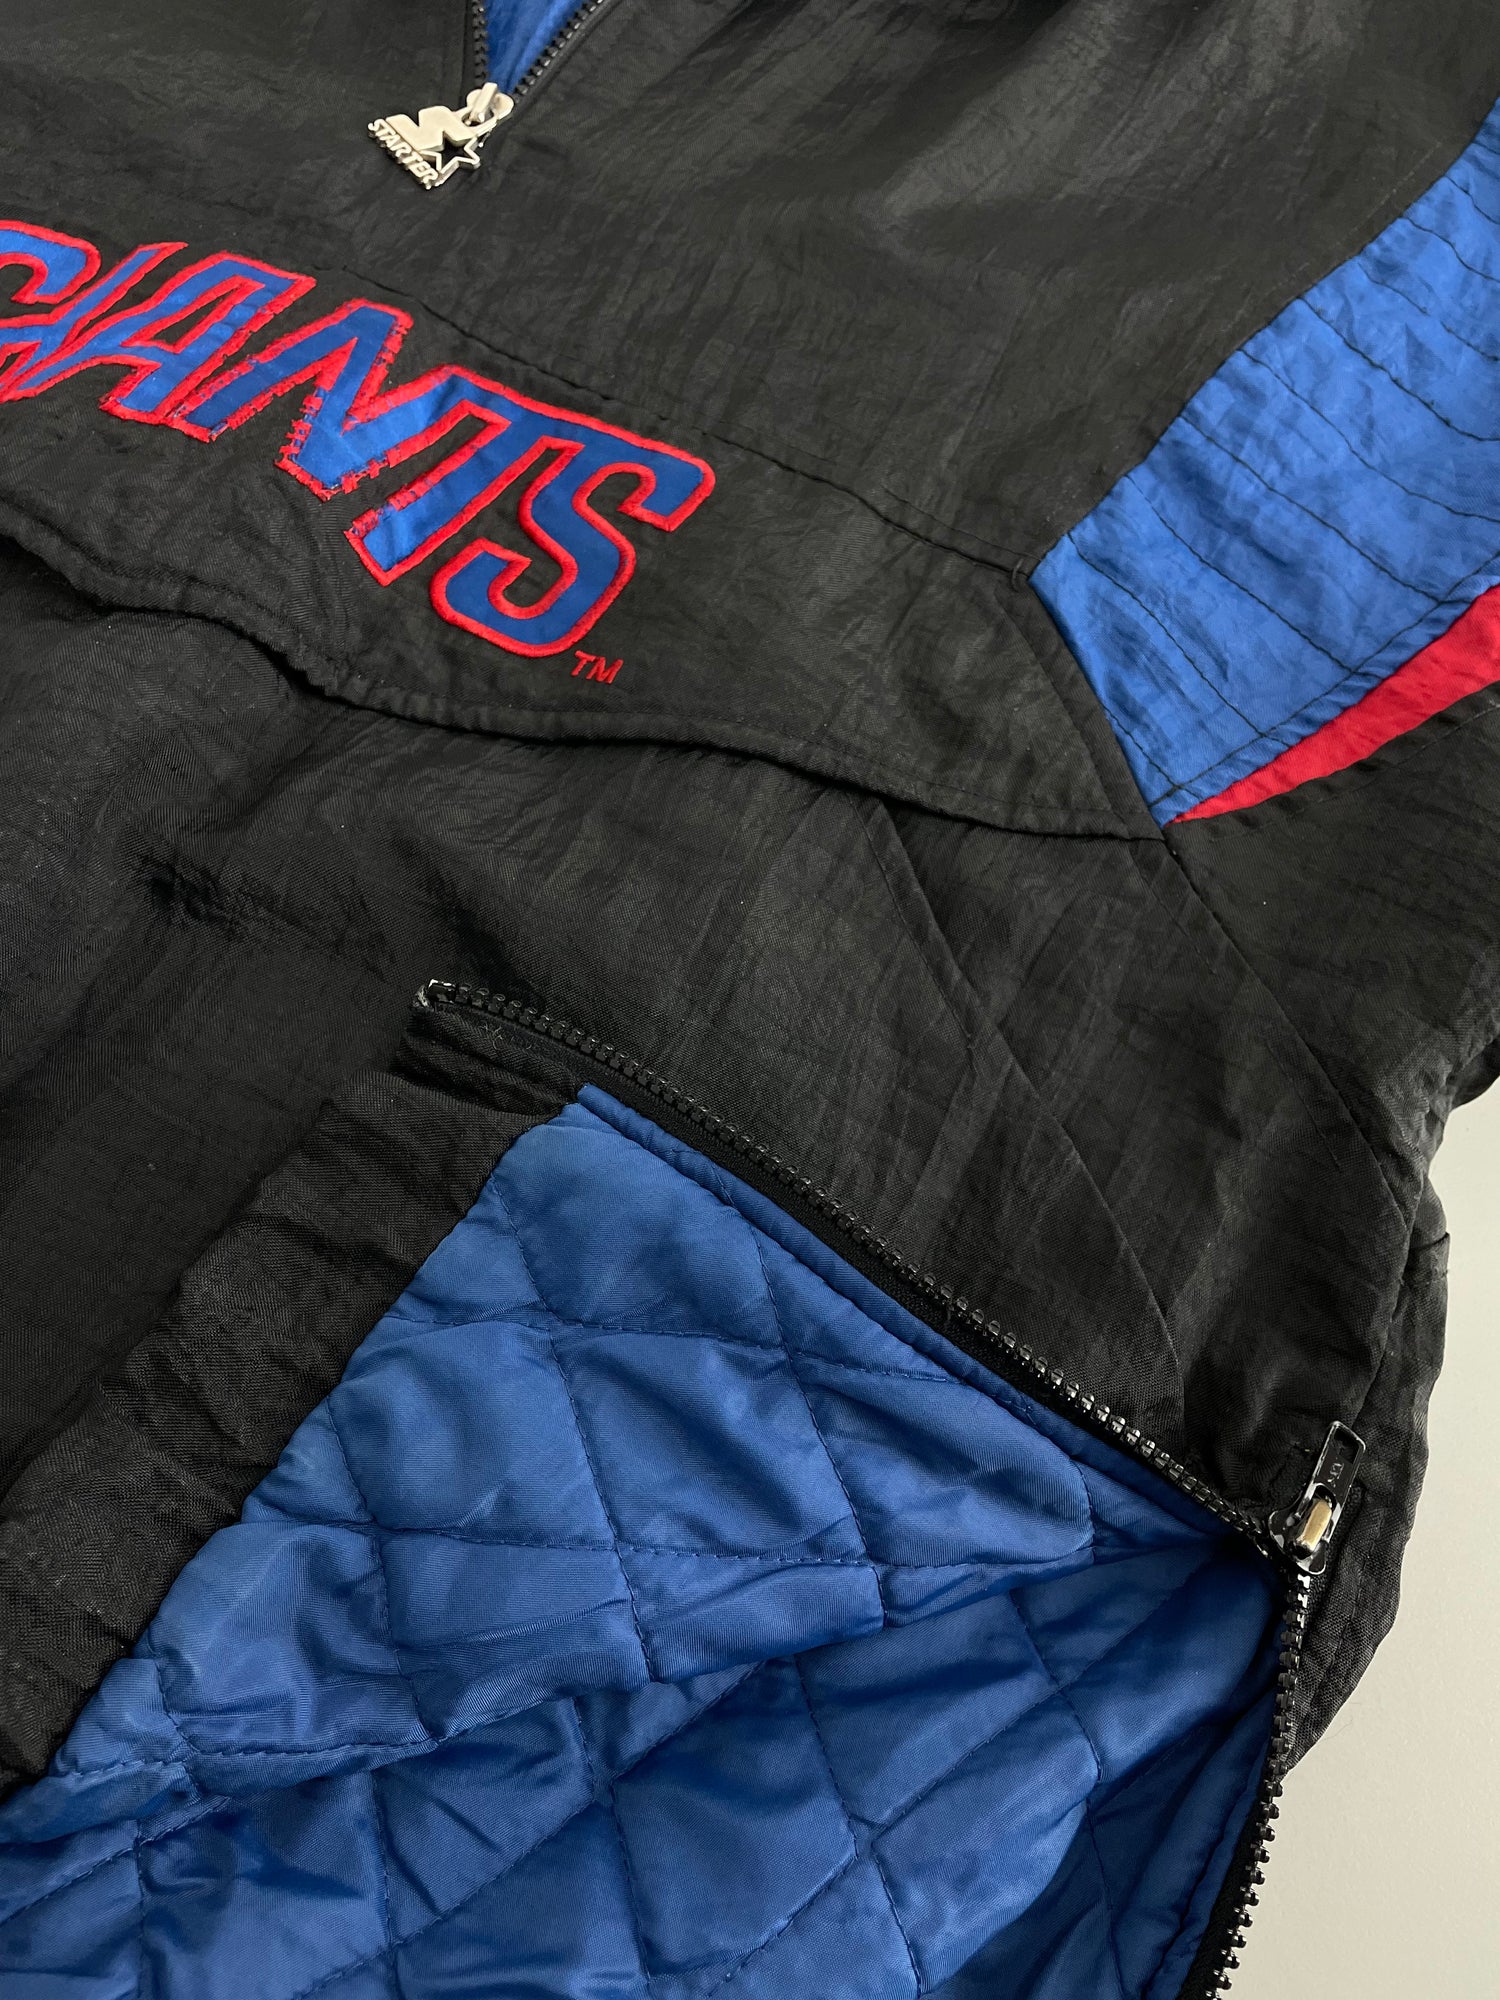 New York Giants/Knicks Starter Jacket